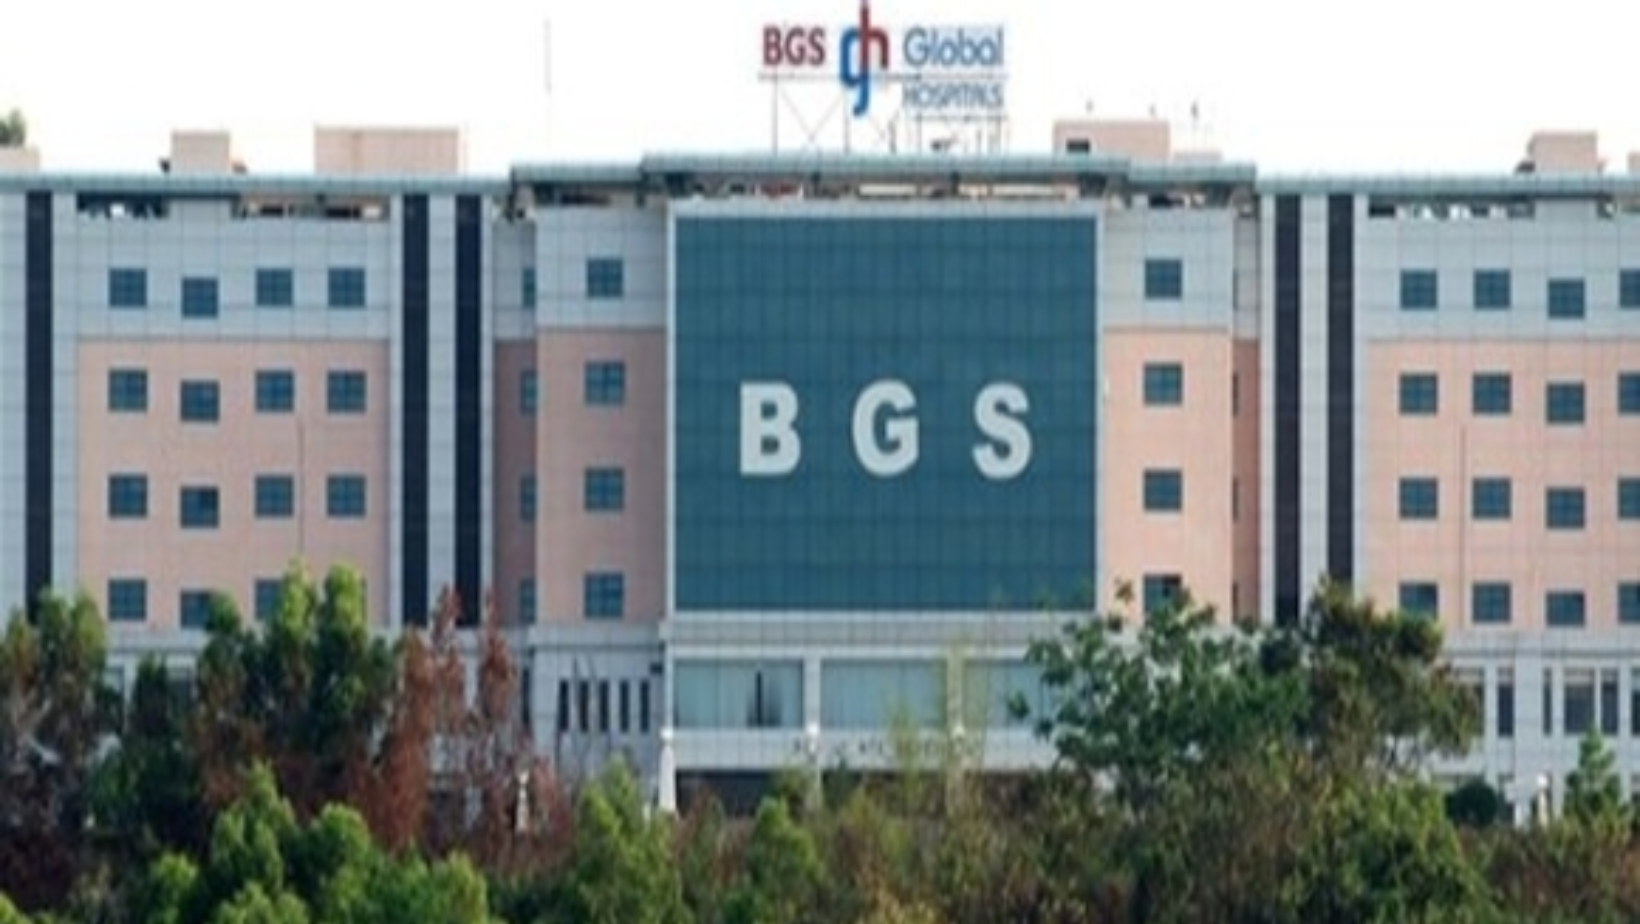 BGS Global Institute Of Medical Sciences, Bangalore.jpg